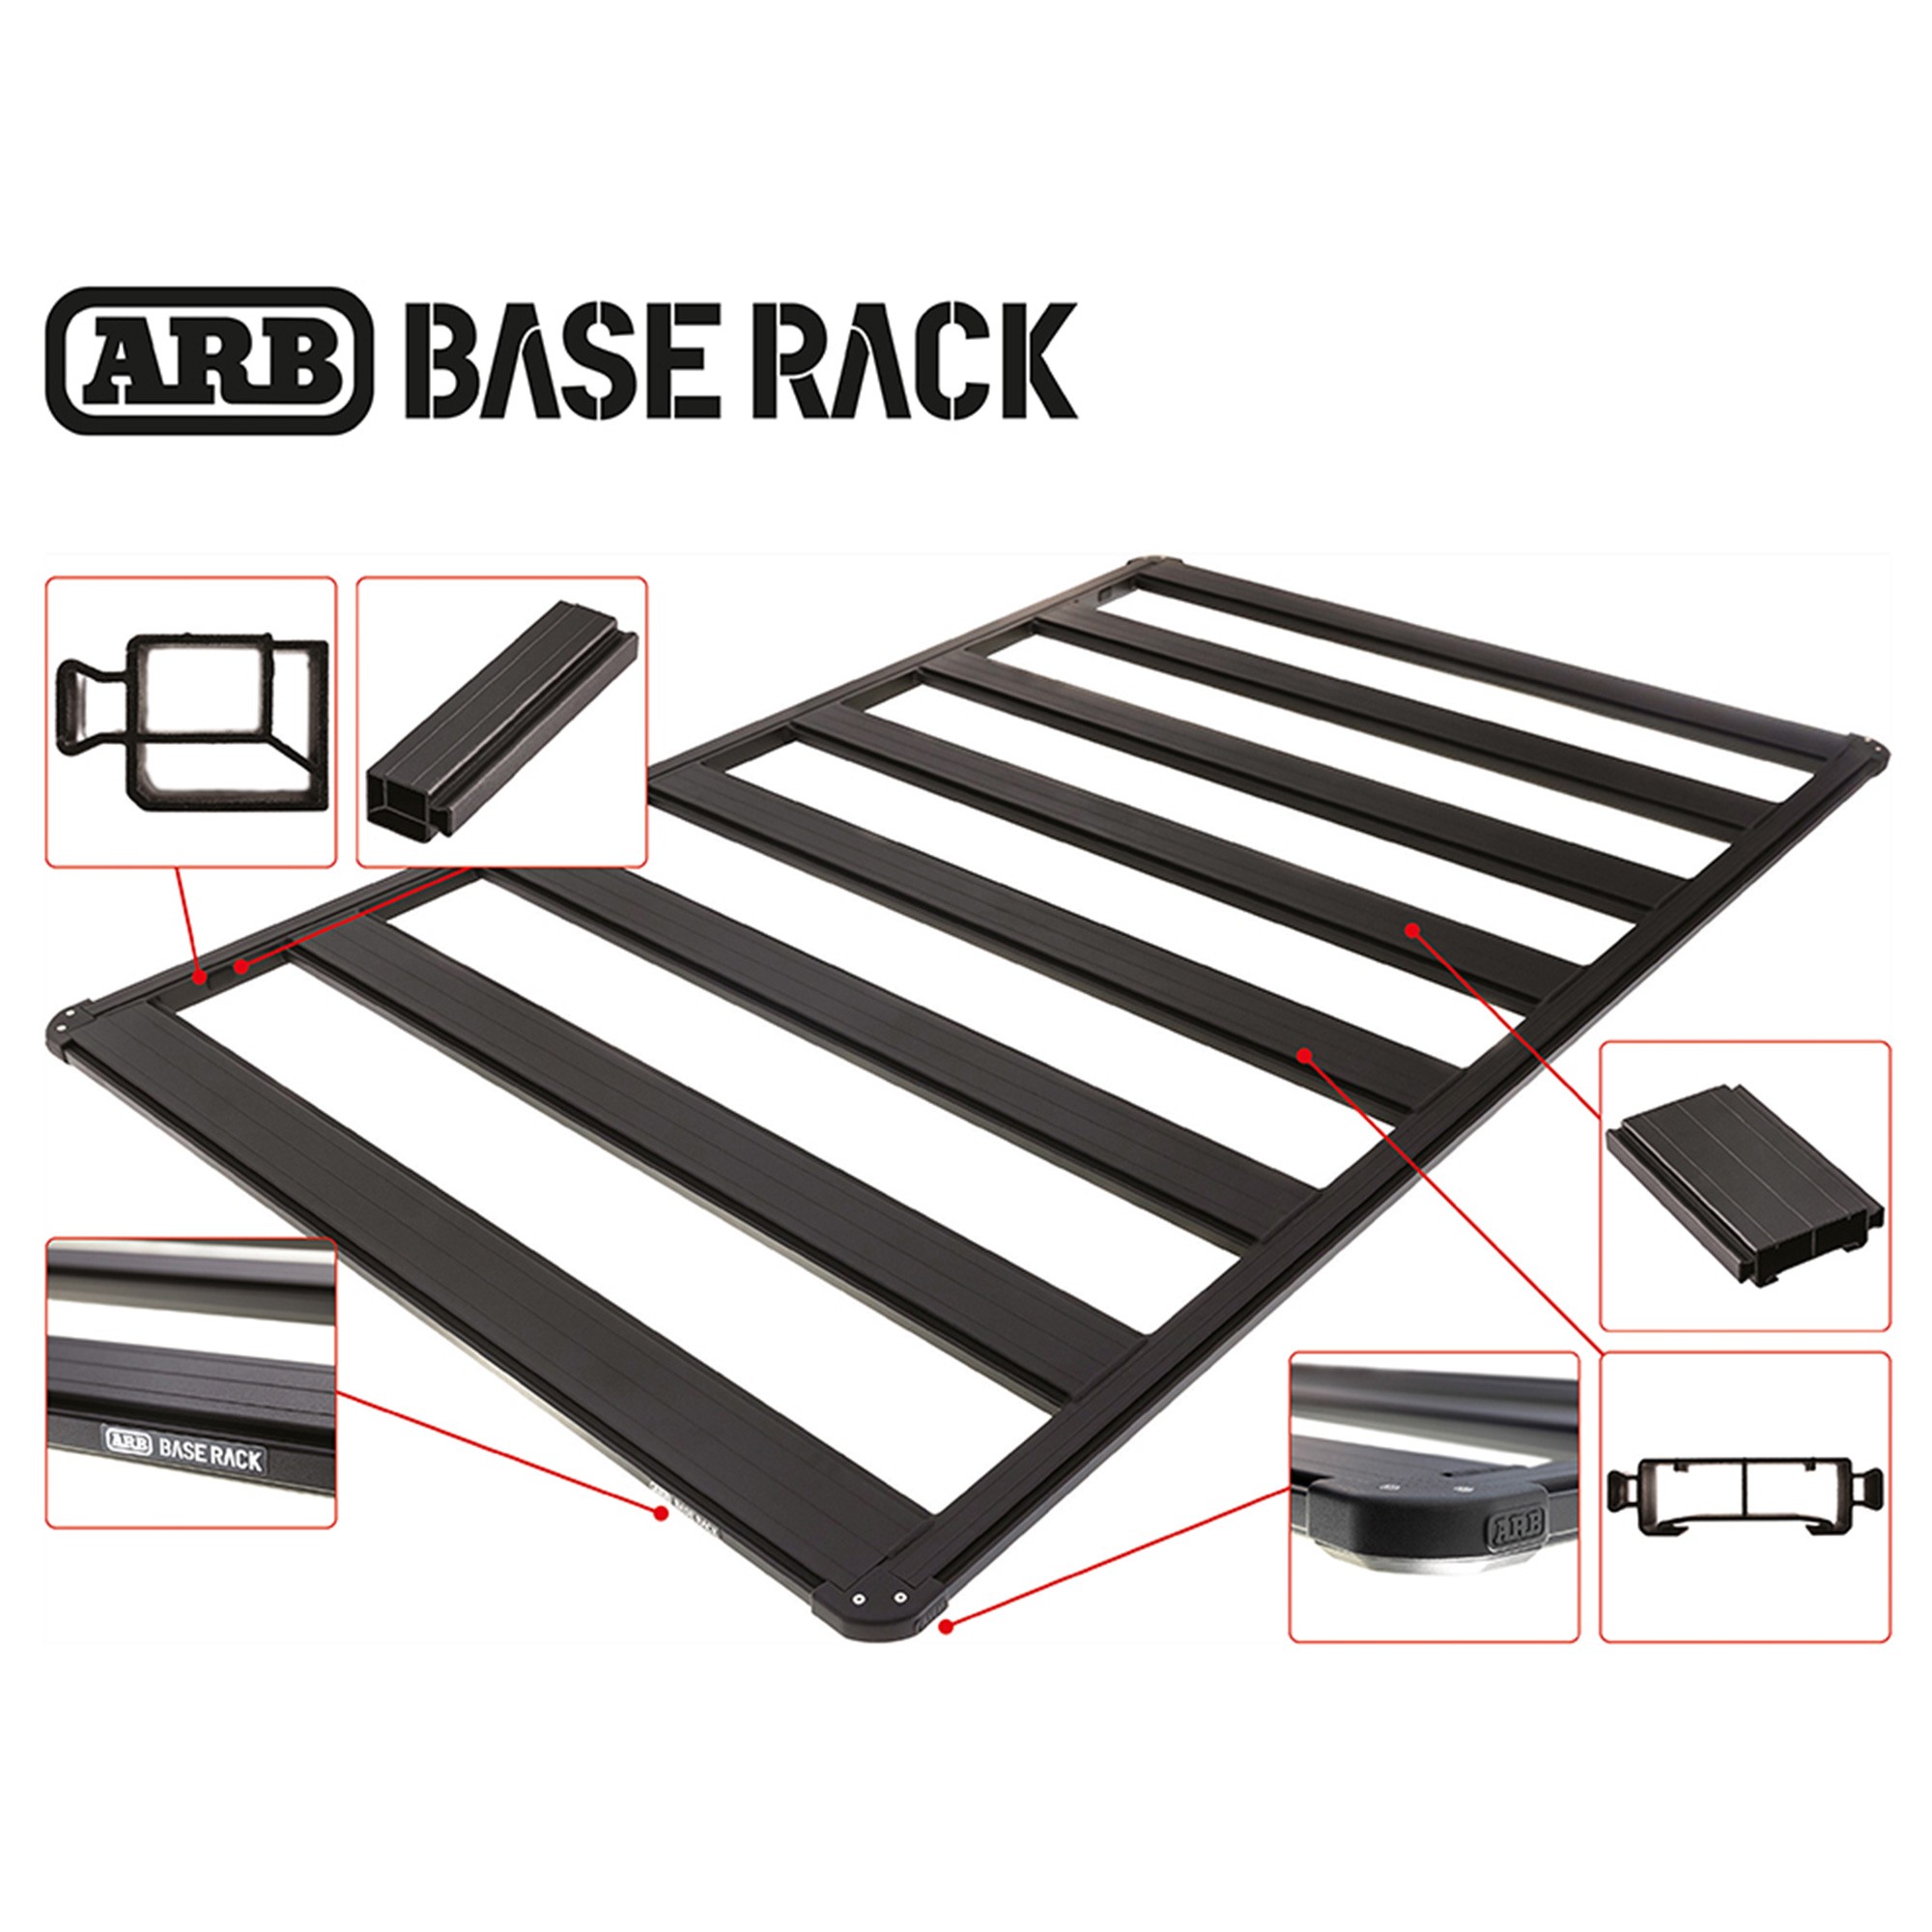 ARB Defender Base Rack 2125x1285mm 8 Beam